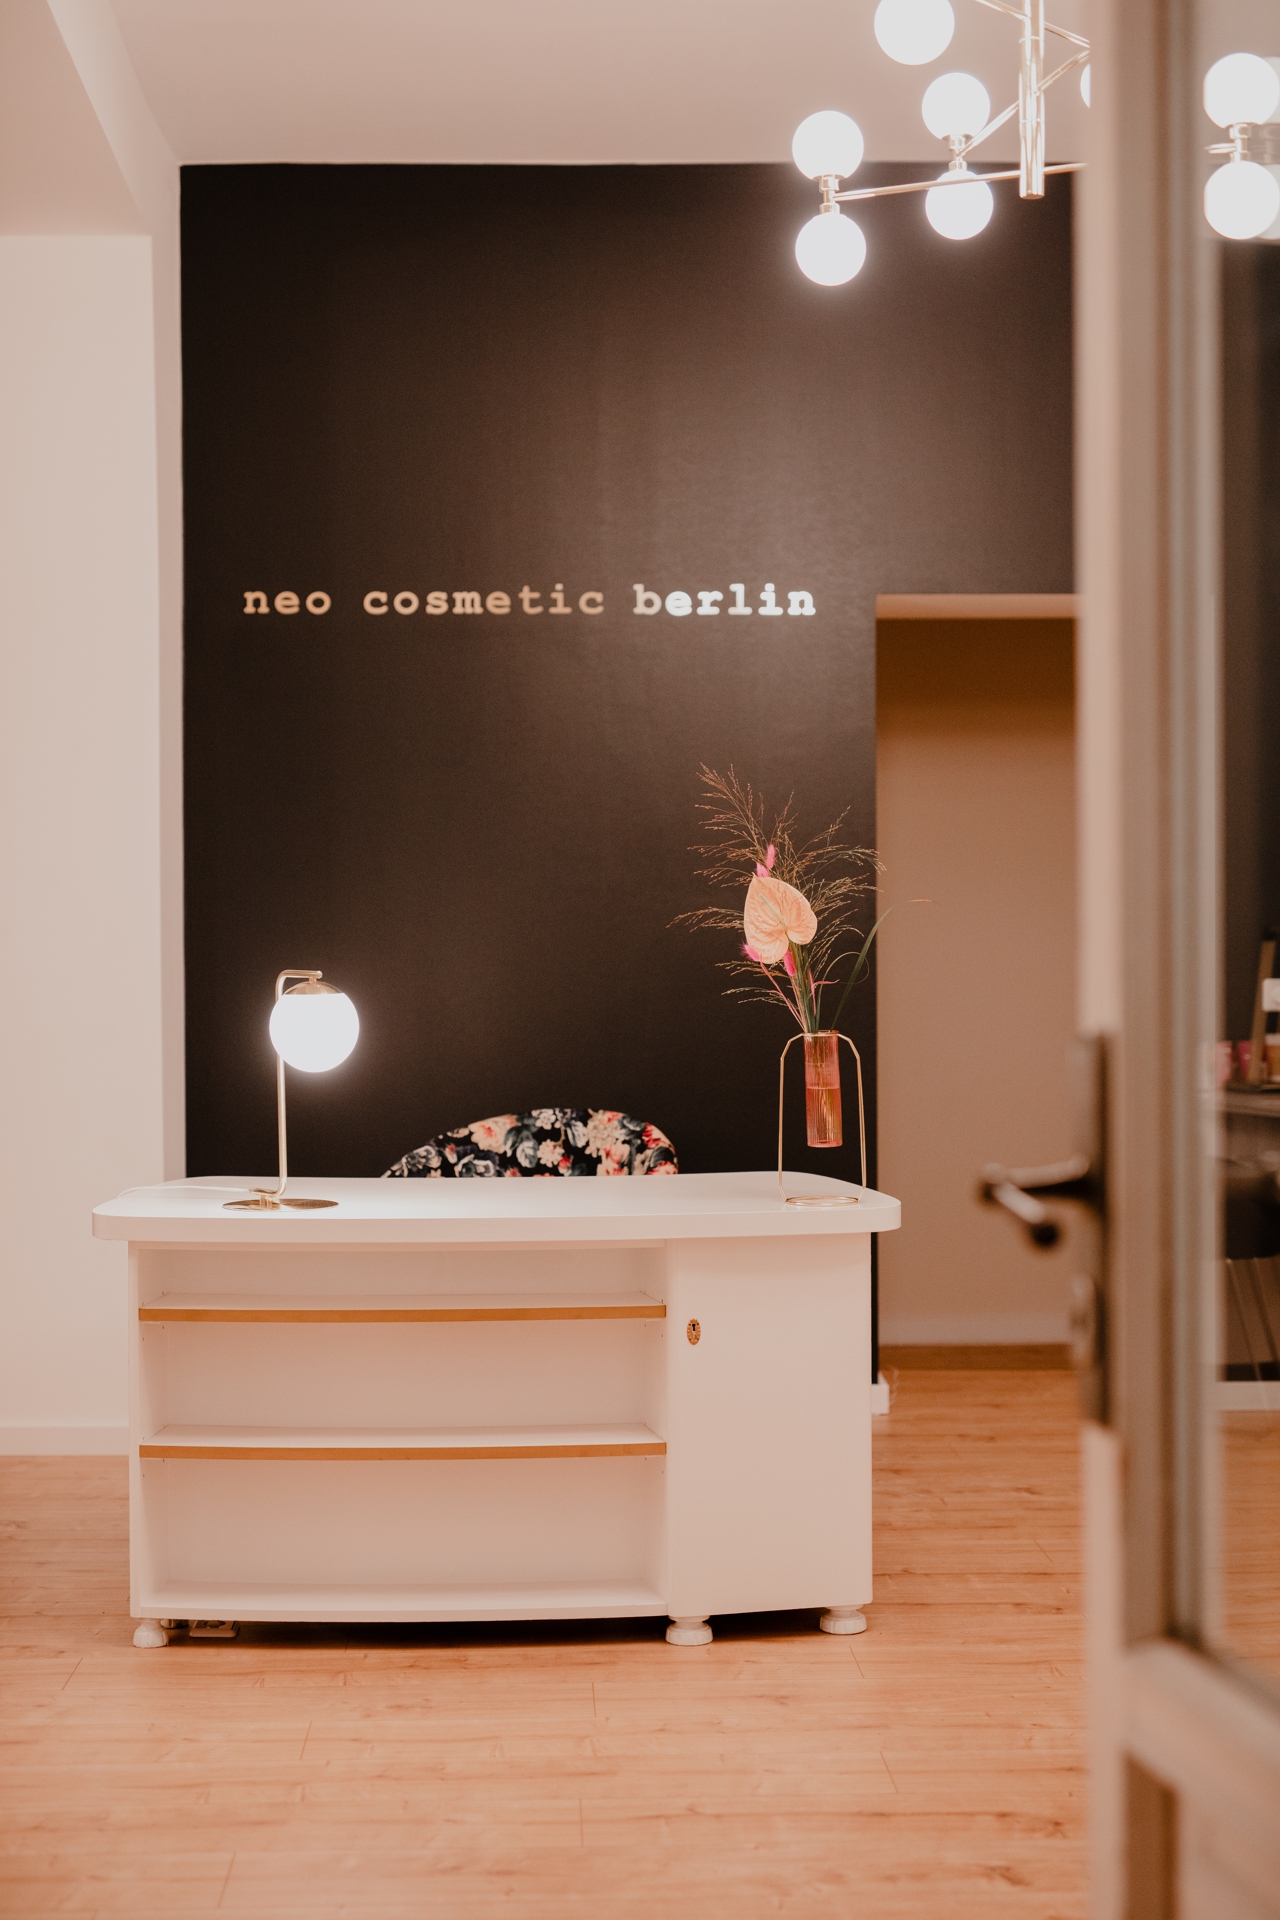 neo cosmetic berlin